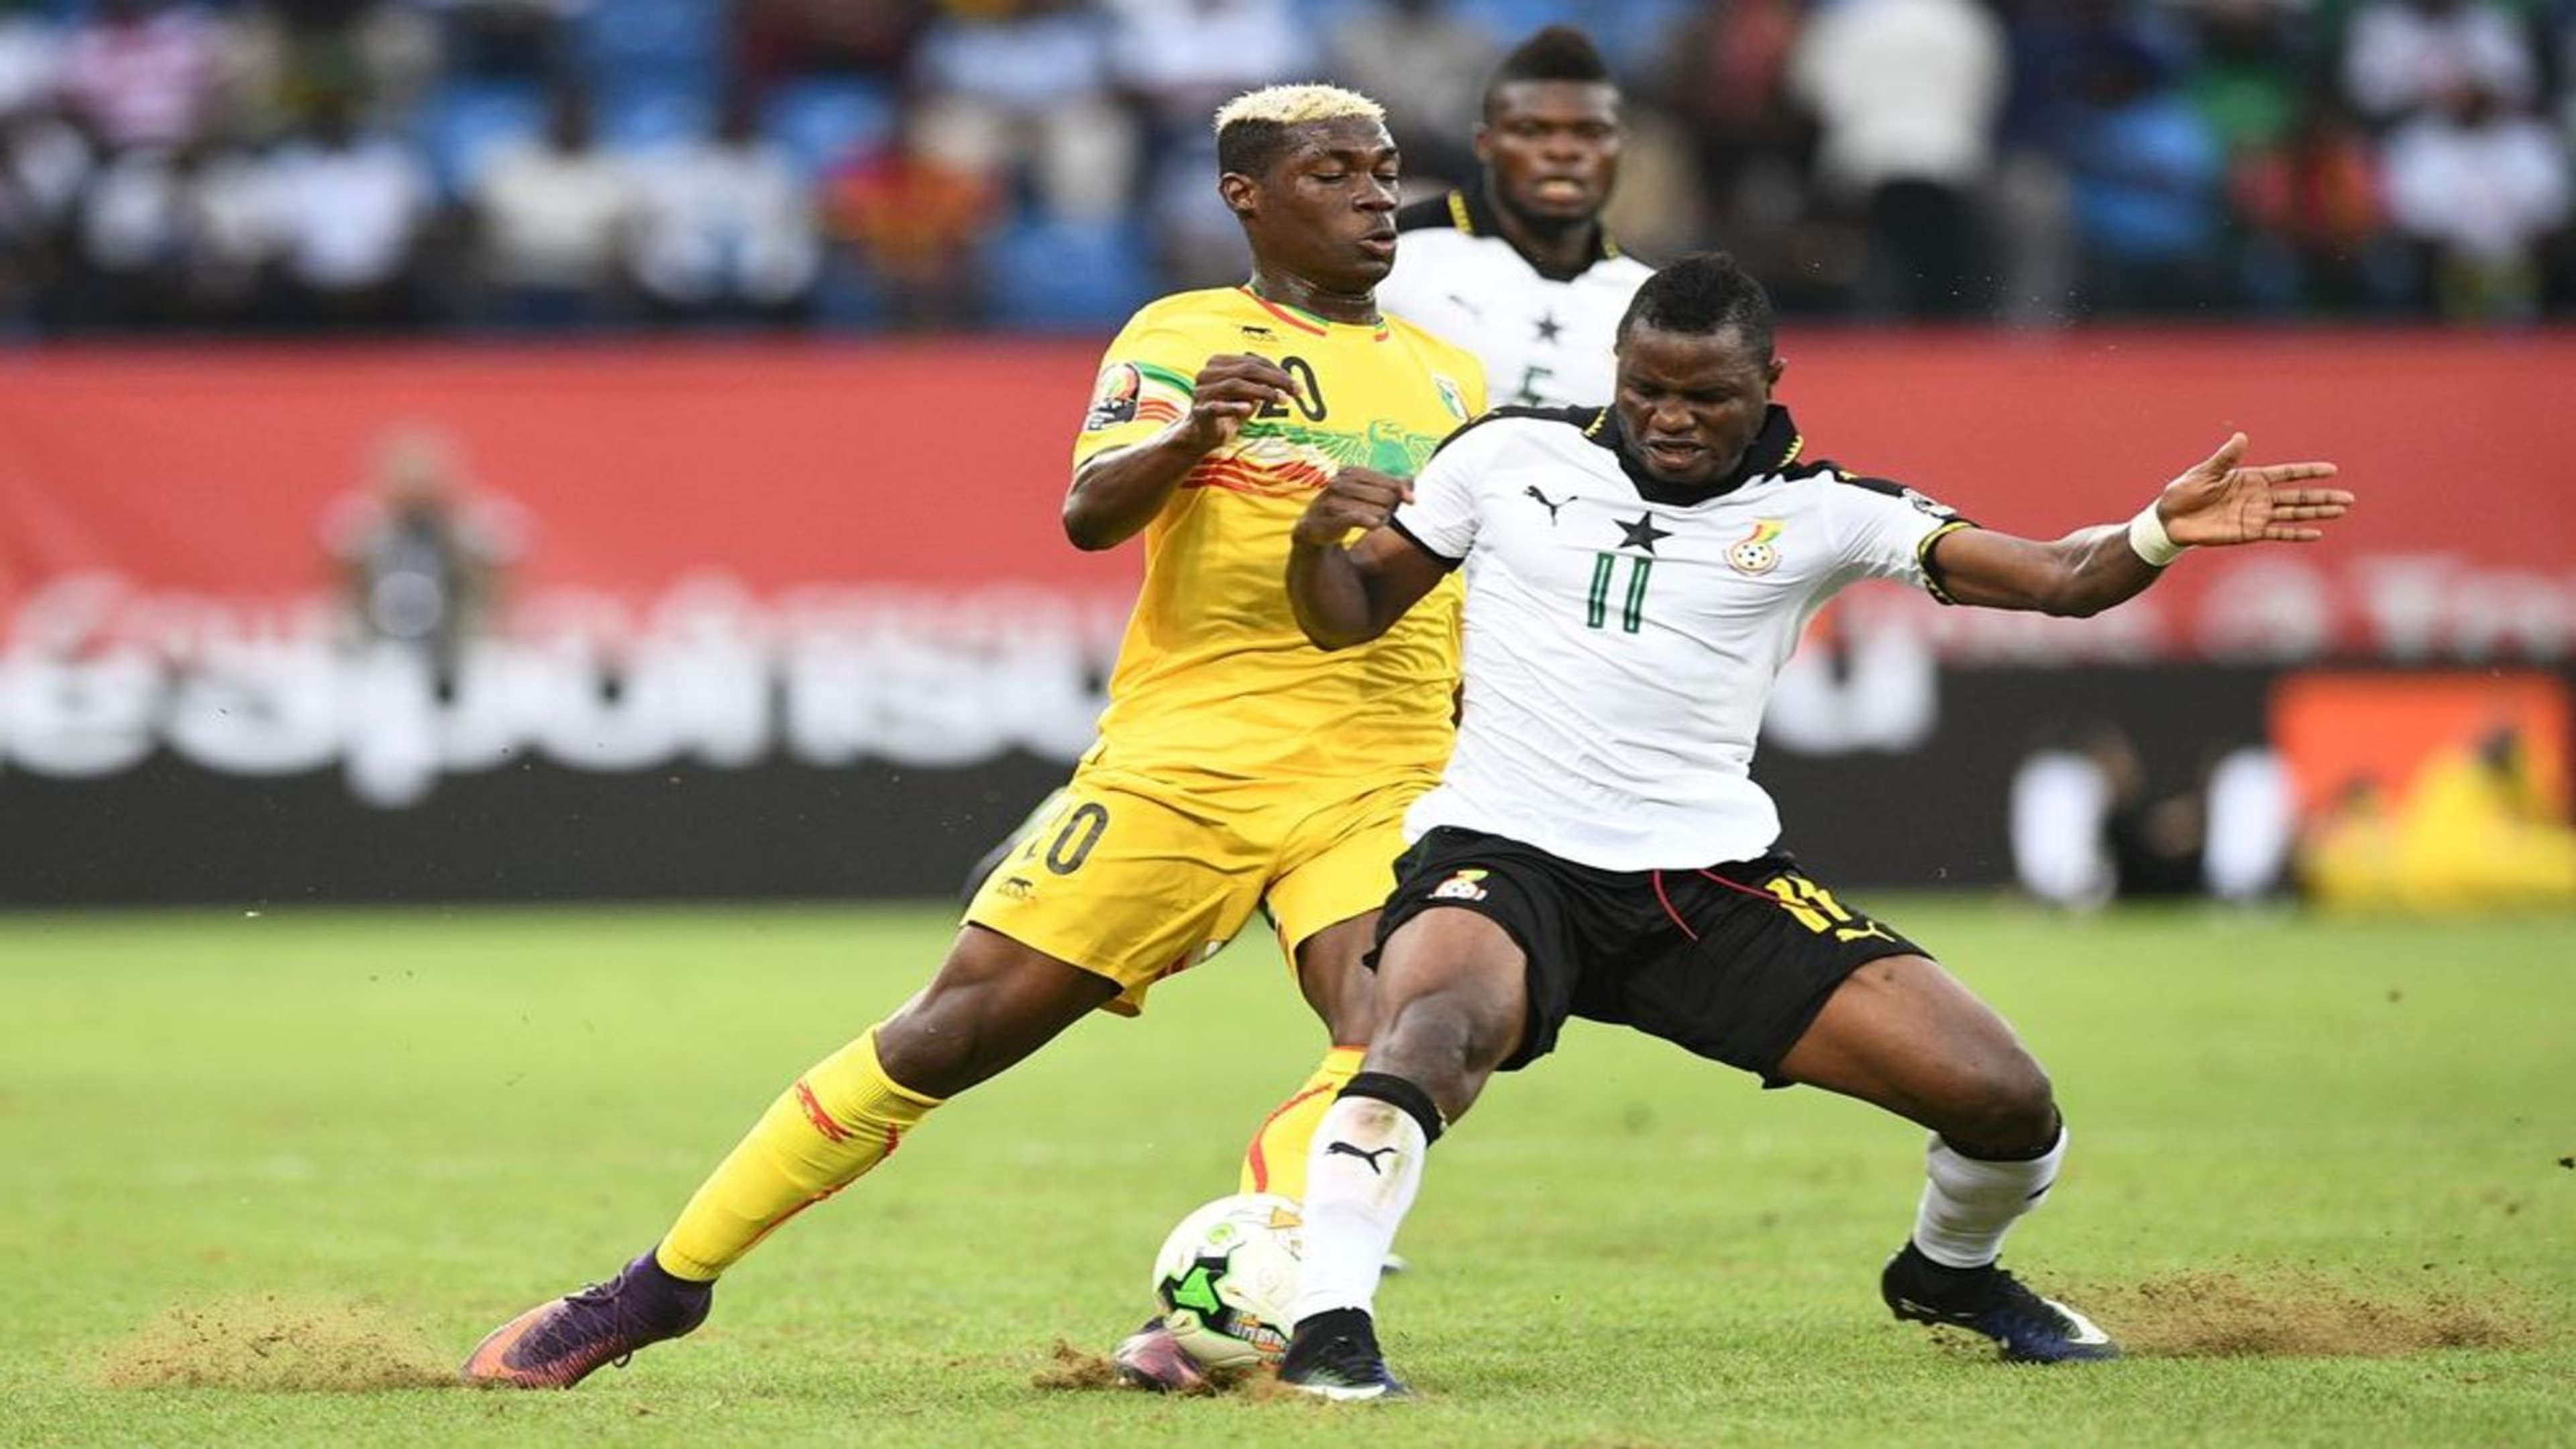 Ghana's midfielder Mubarak Wakaso and Mali's midfielder Yves Bissouma during the 2017 Africa Cup of Nations